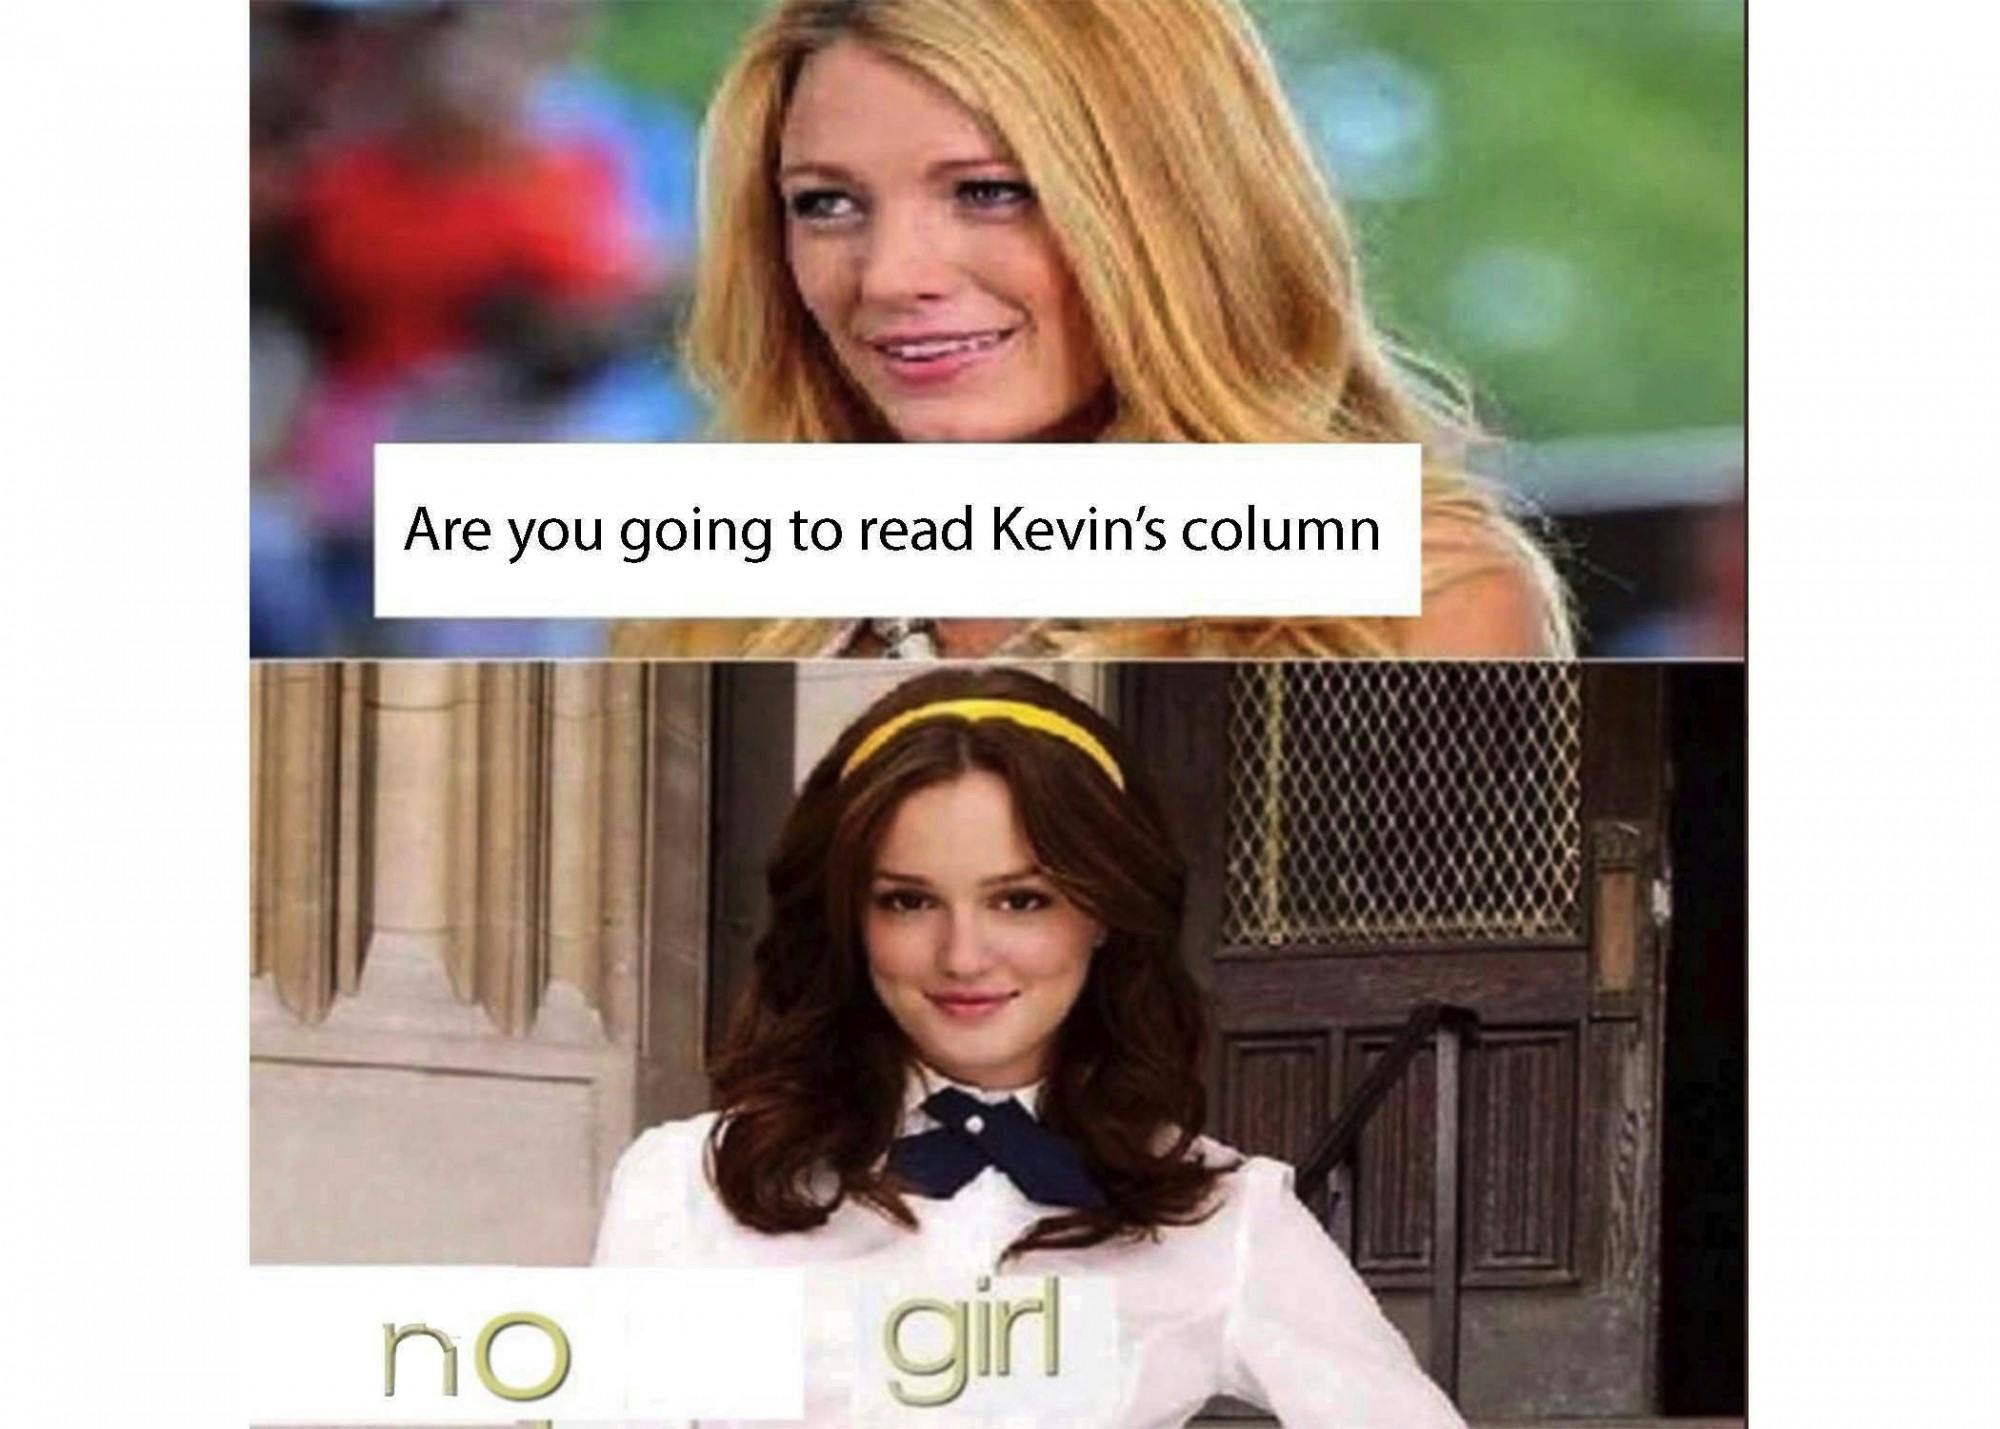 kevin's column